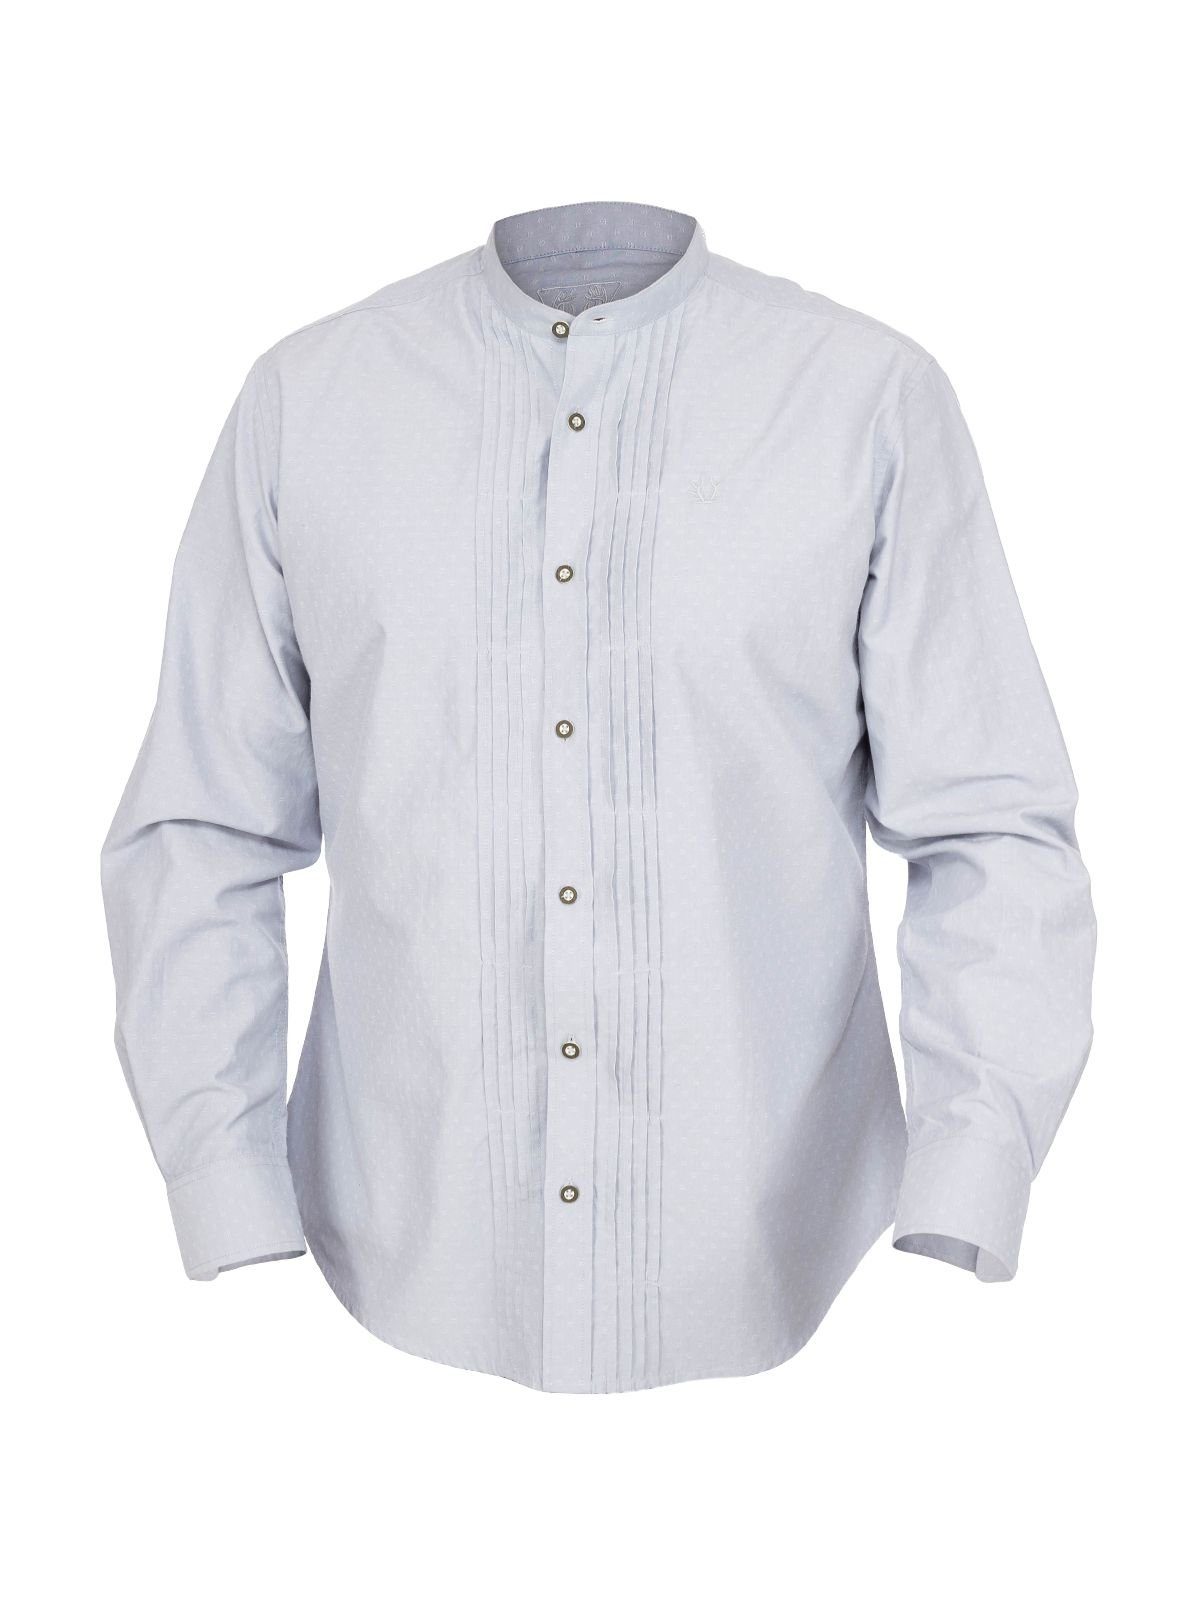 KRÜGER MADL & BUAM Trachtenhemd Hemd 911365-000-81 hellblau (Perfekt Fit)